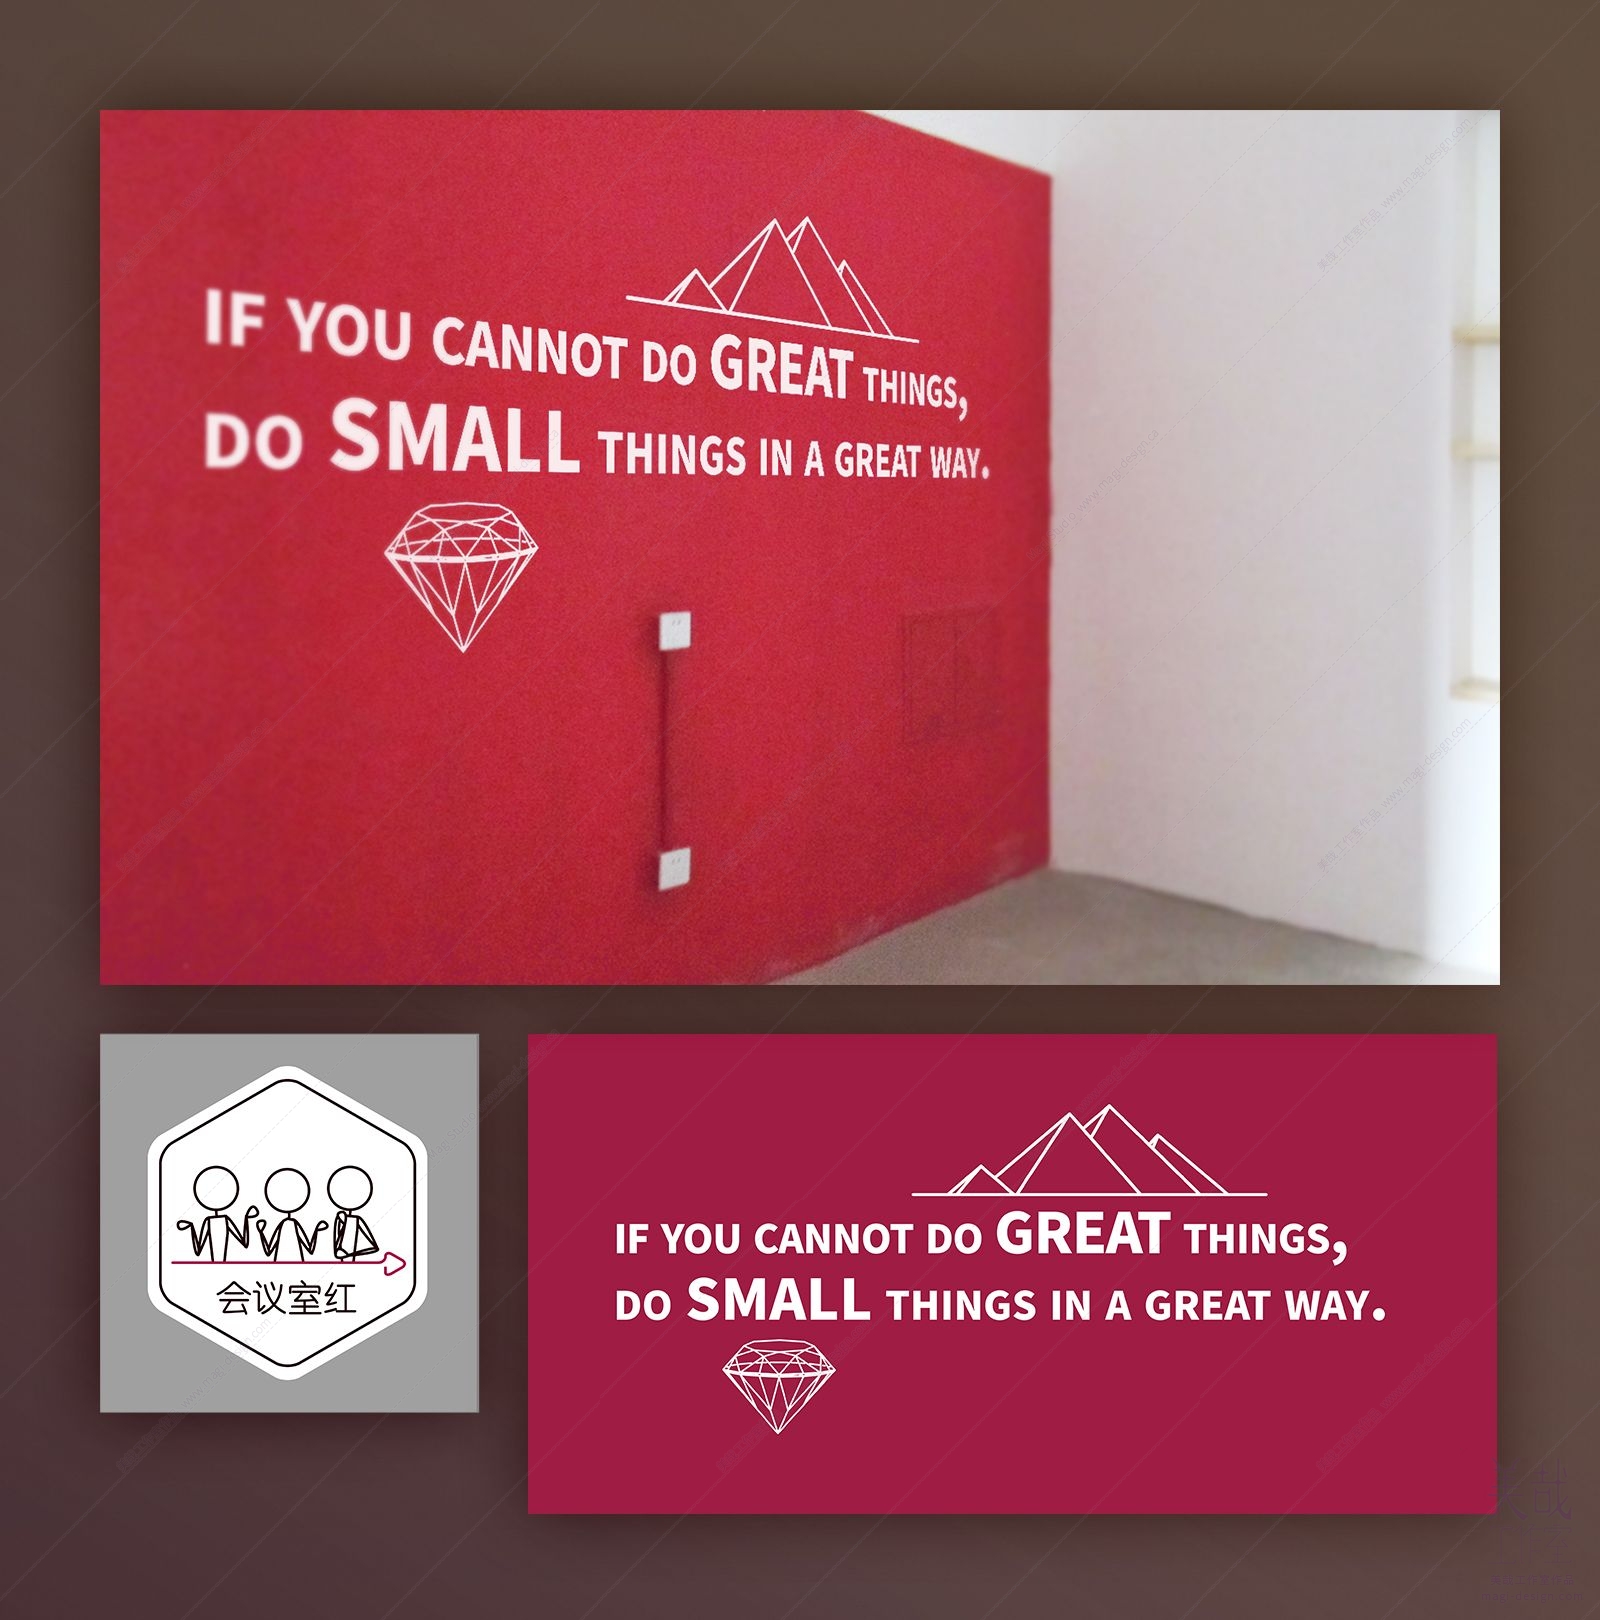 办公空间墙绘图案设计-红色墙面-金字塔于钻石-If you cannot do great things, do small thing in a great way.